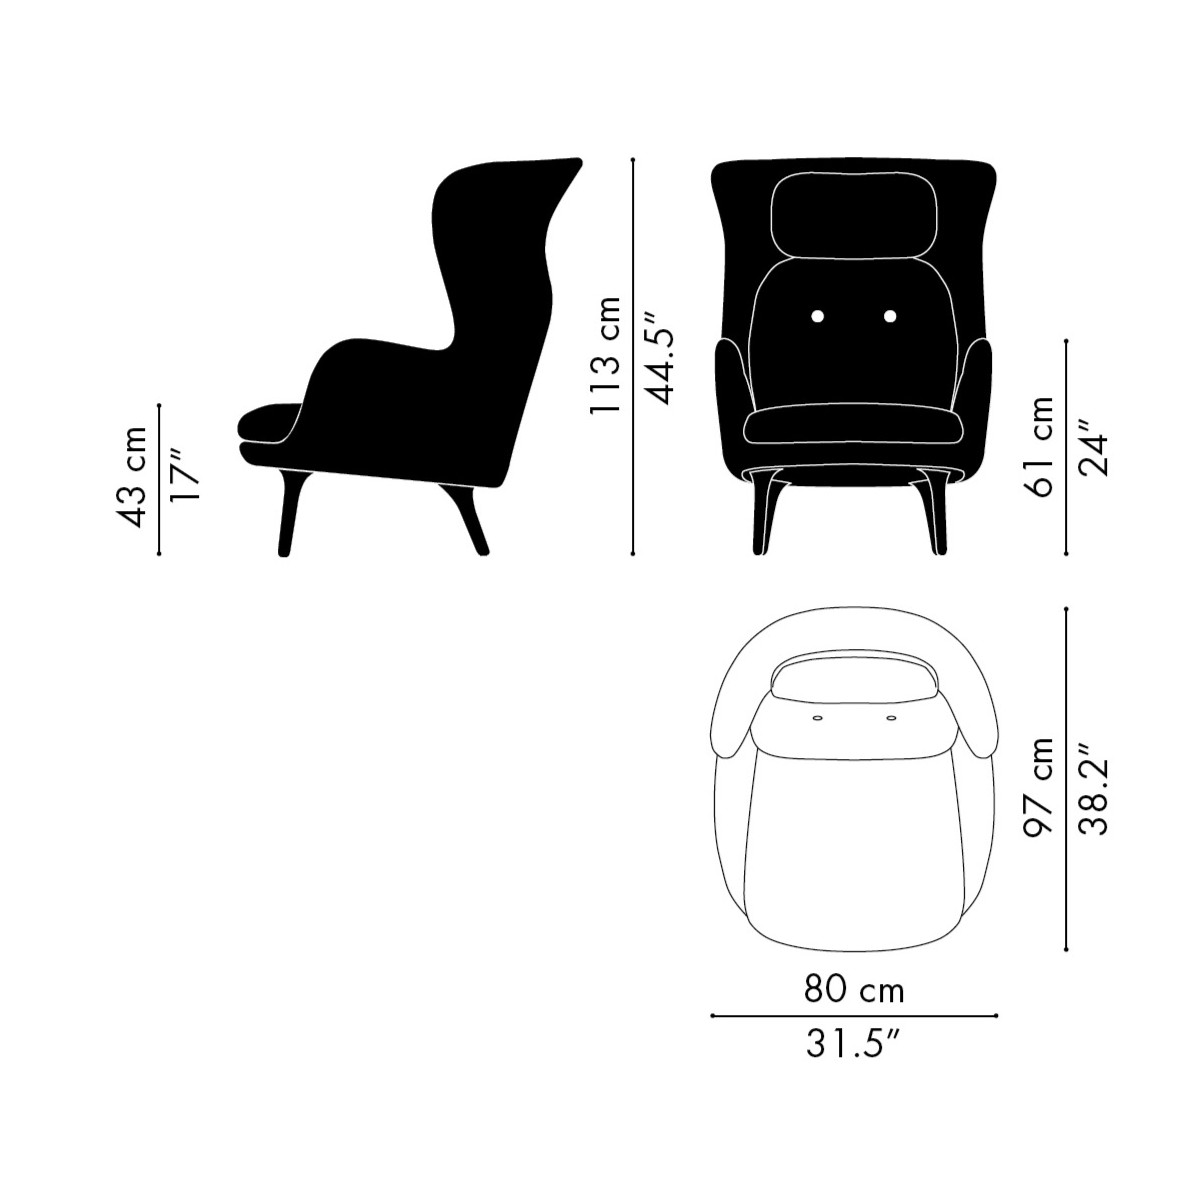 Ro Chair